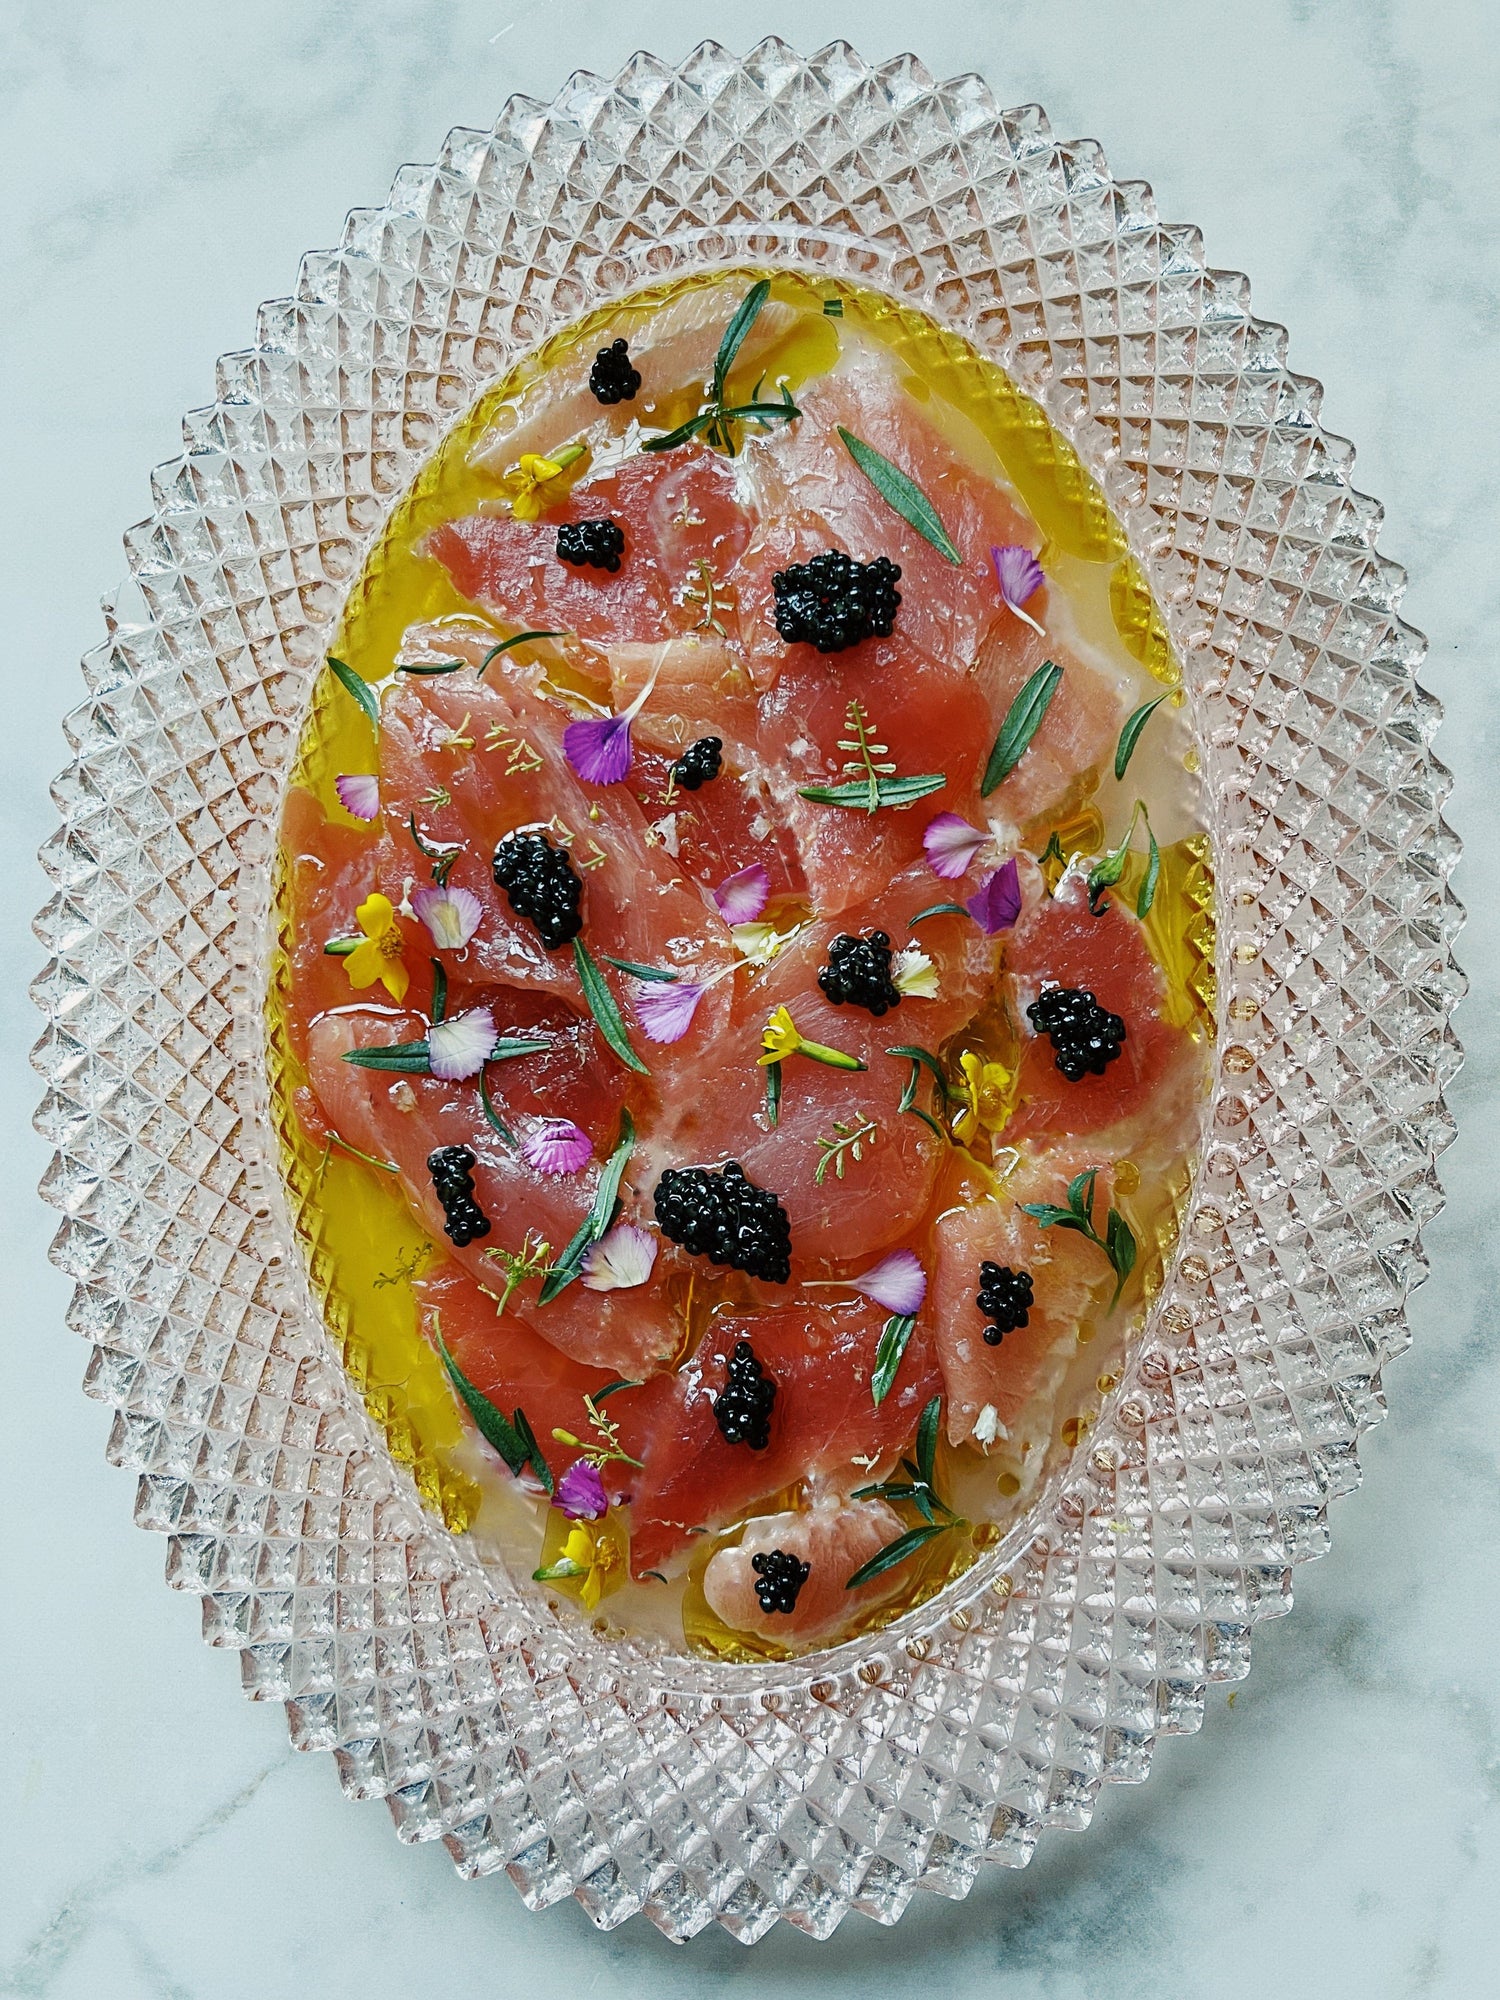 Tuna Crudo with Caviar